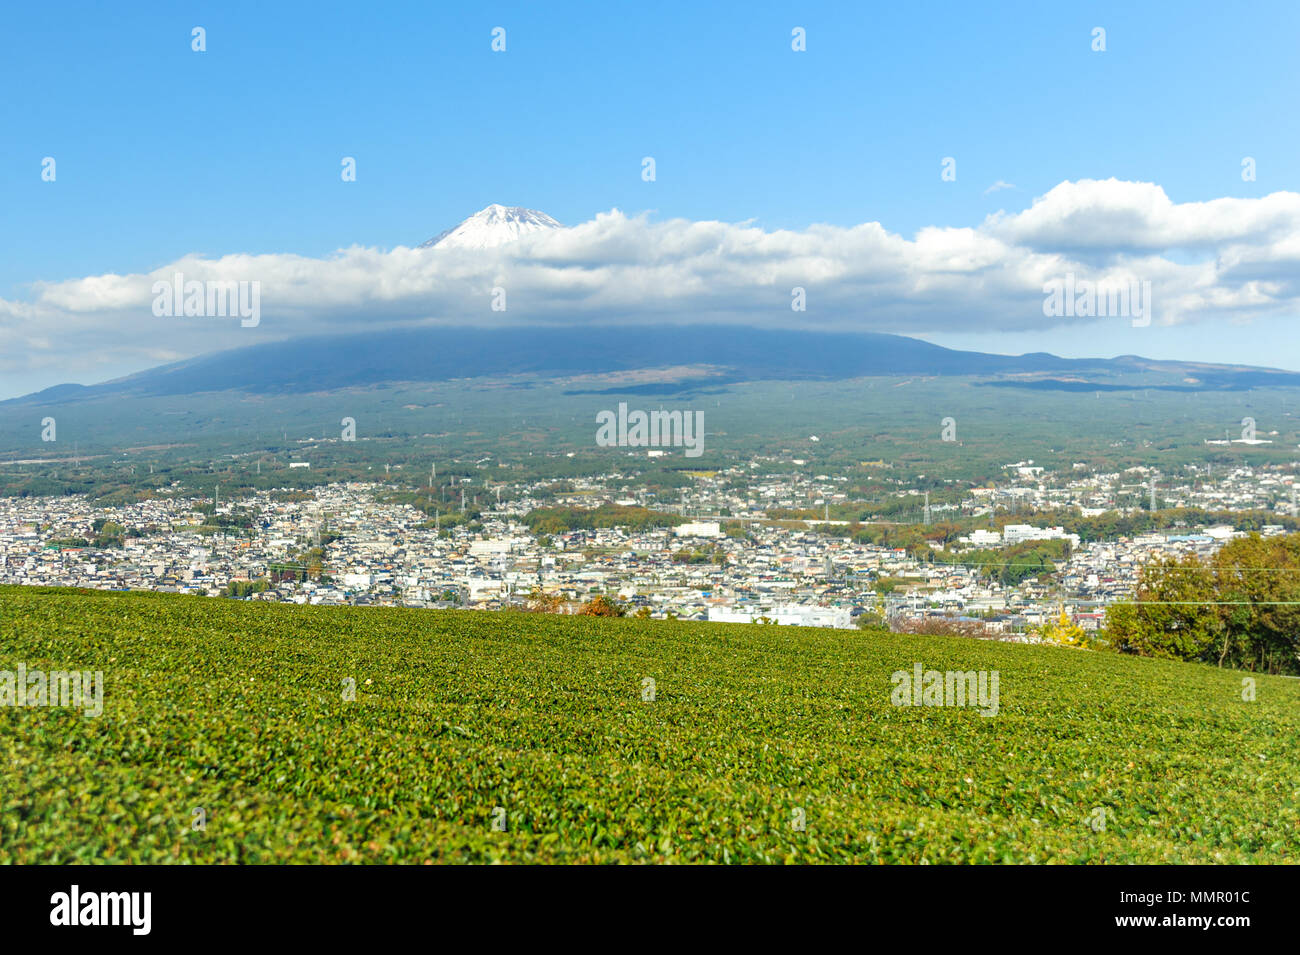 Wonderful view of Mount Fuji with green tea plantation. Fuji city, Shizuoka Prefecture, Japan. Stock Photo